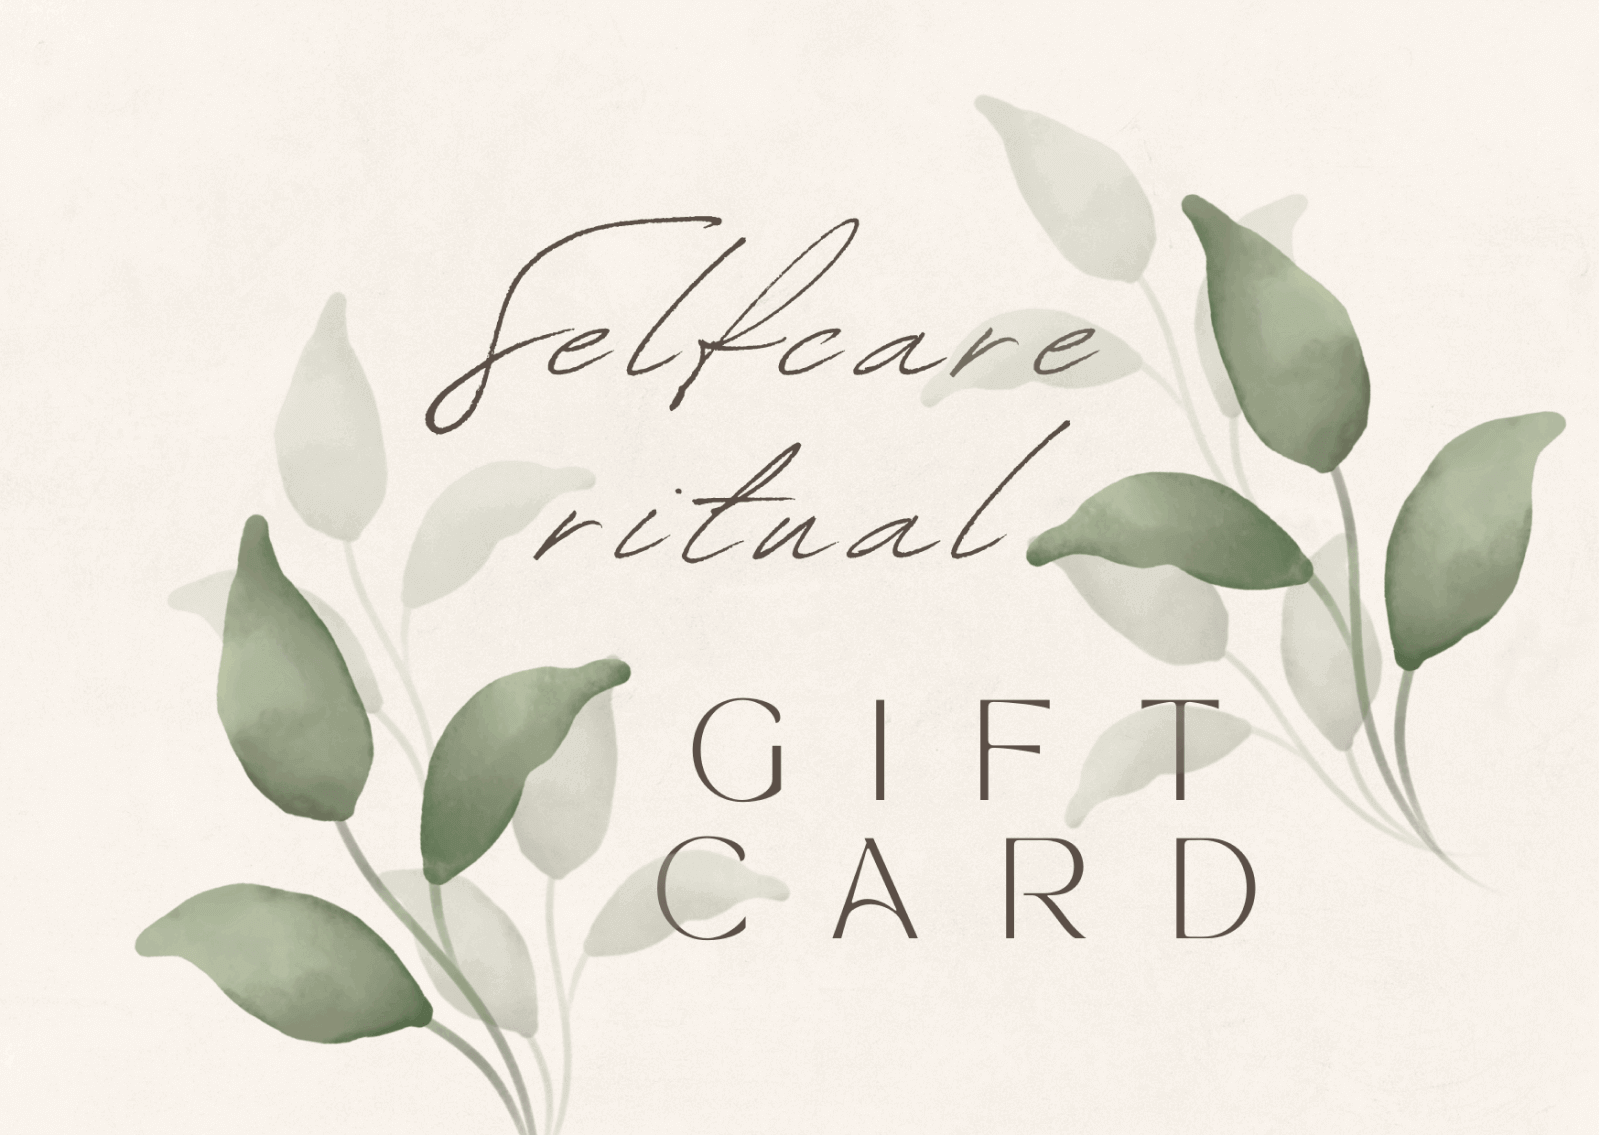 The selfcare ritual gift card - Annie Blume